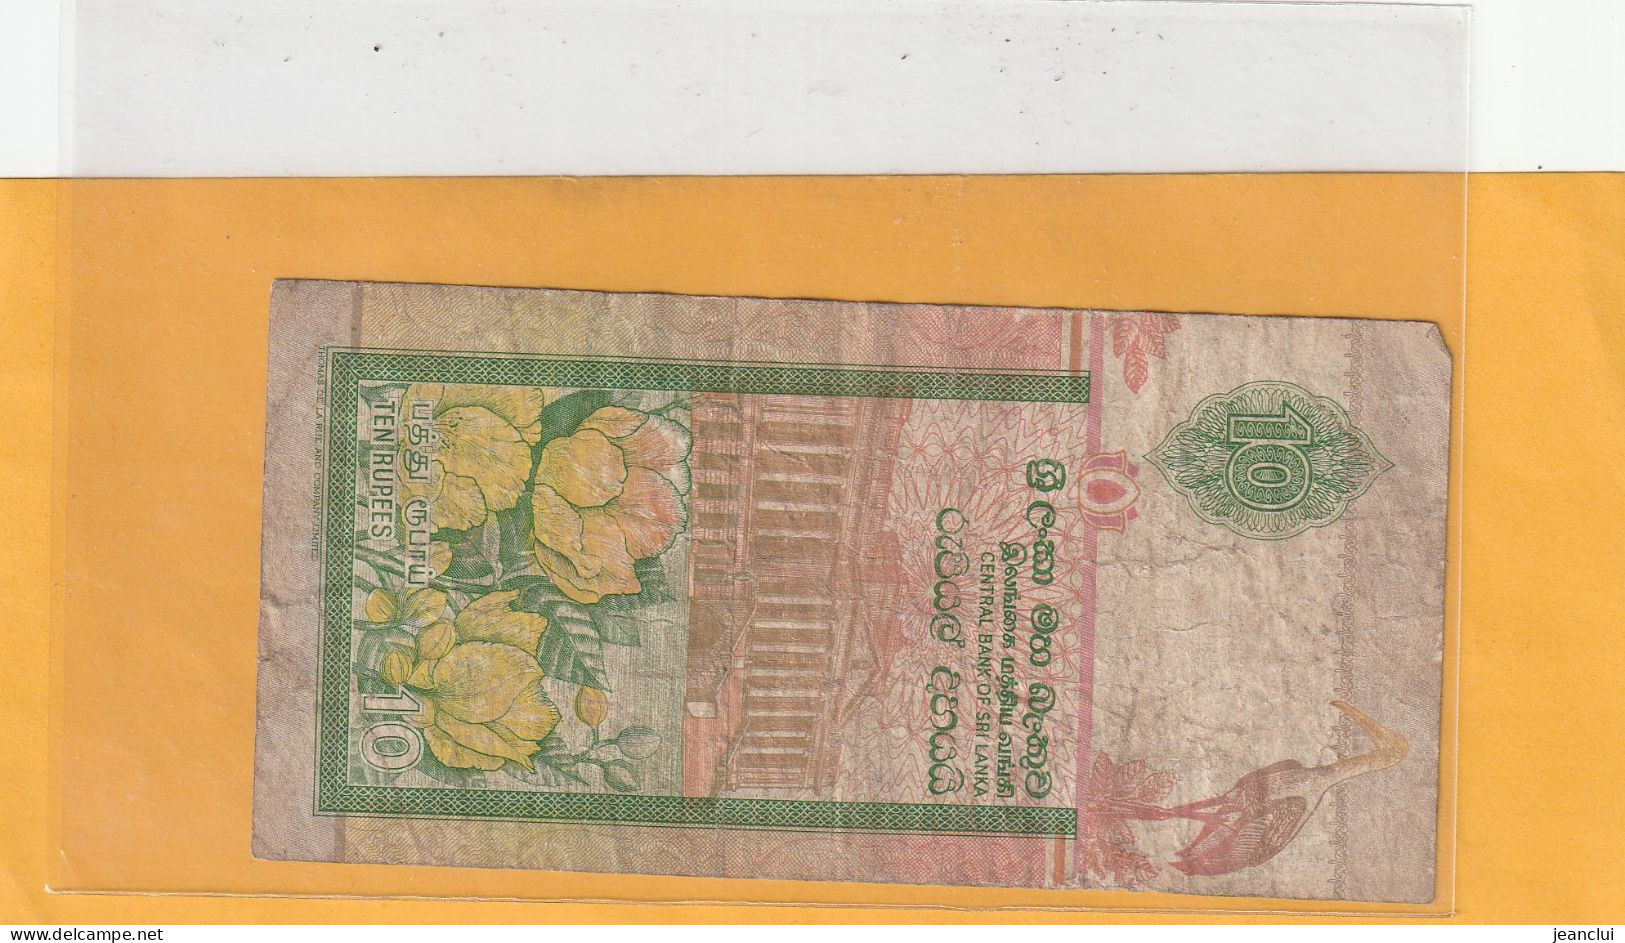 CENTRAL BANK OF SRI LANKA   .  10 RUPEES  .  19-08-1994  .  N°   M/83 114784 .  2 SCANNES  .  BILLET USITE - Sri Lanka